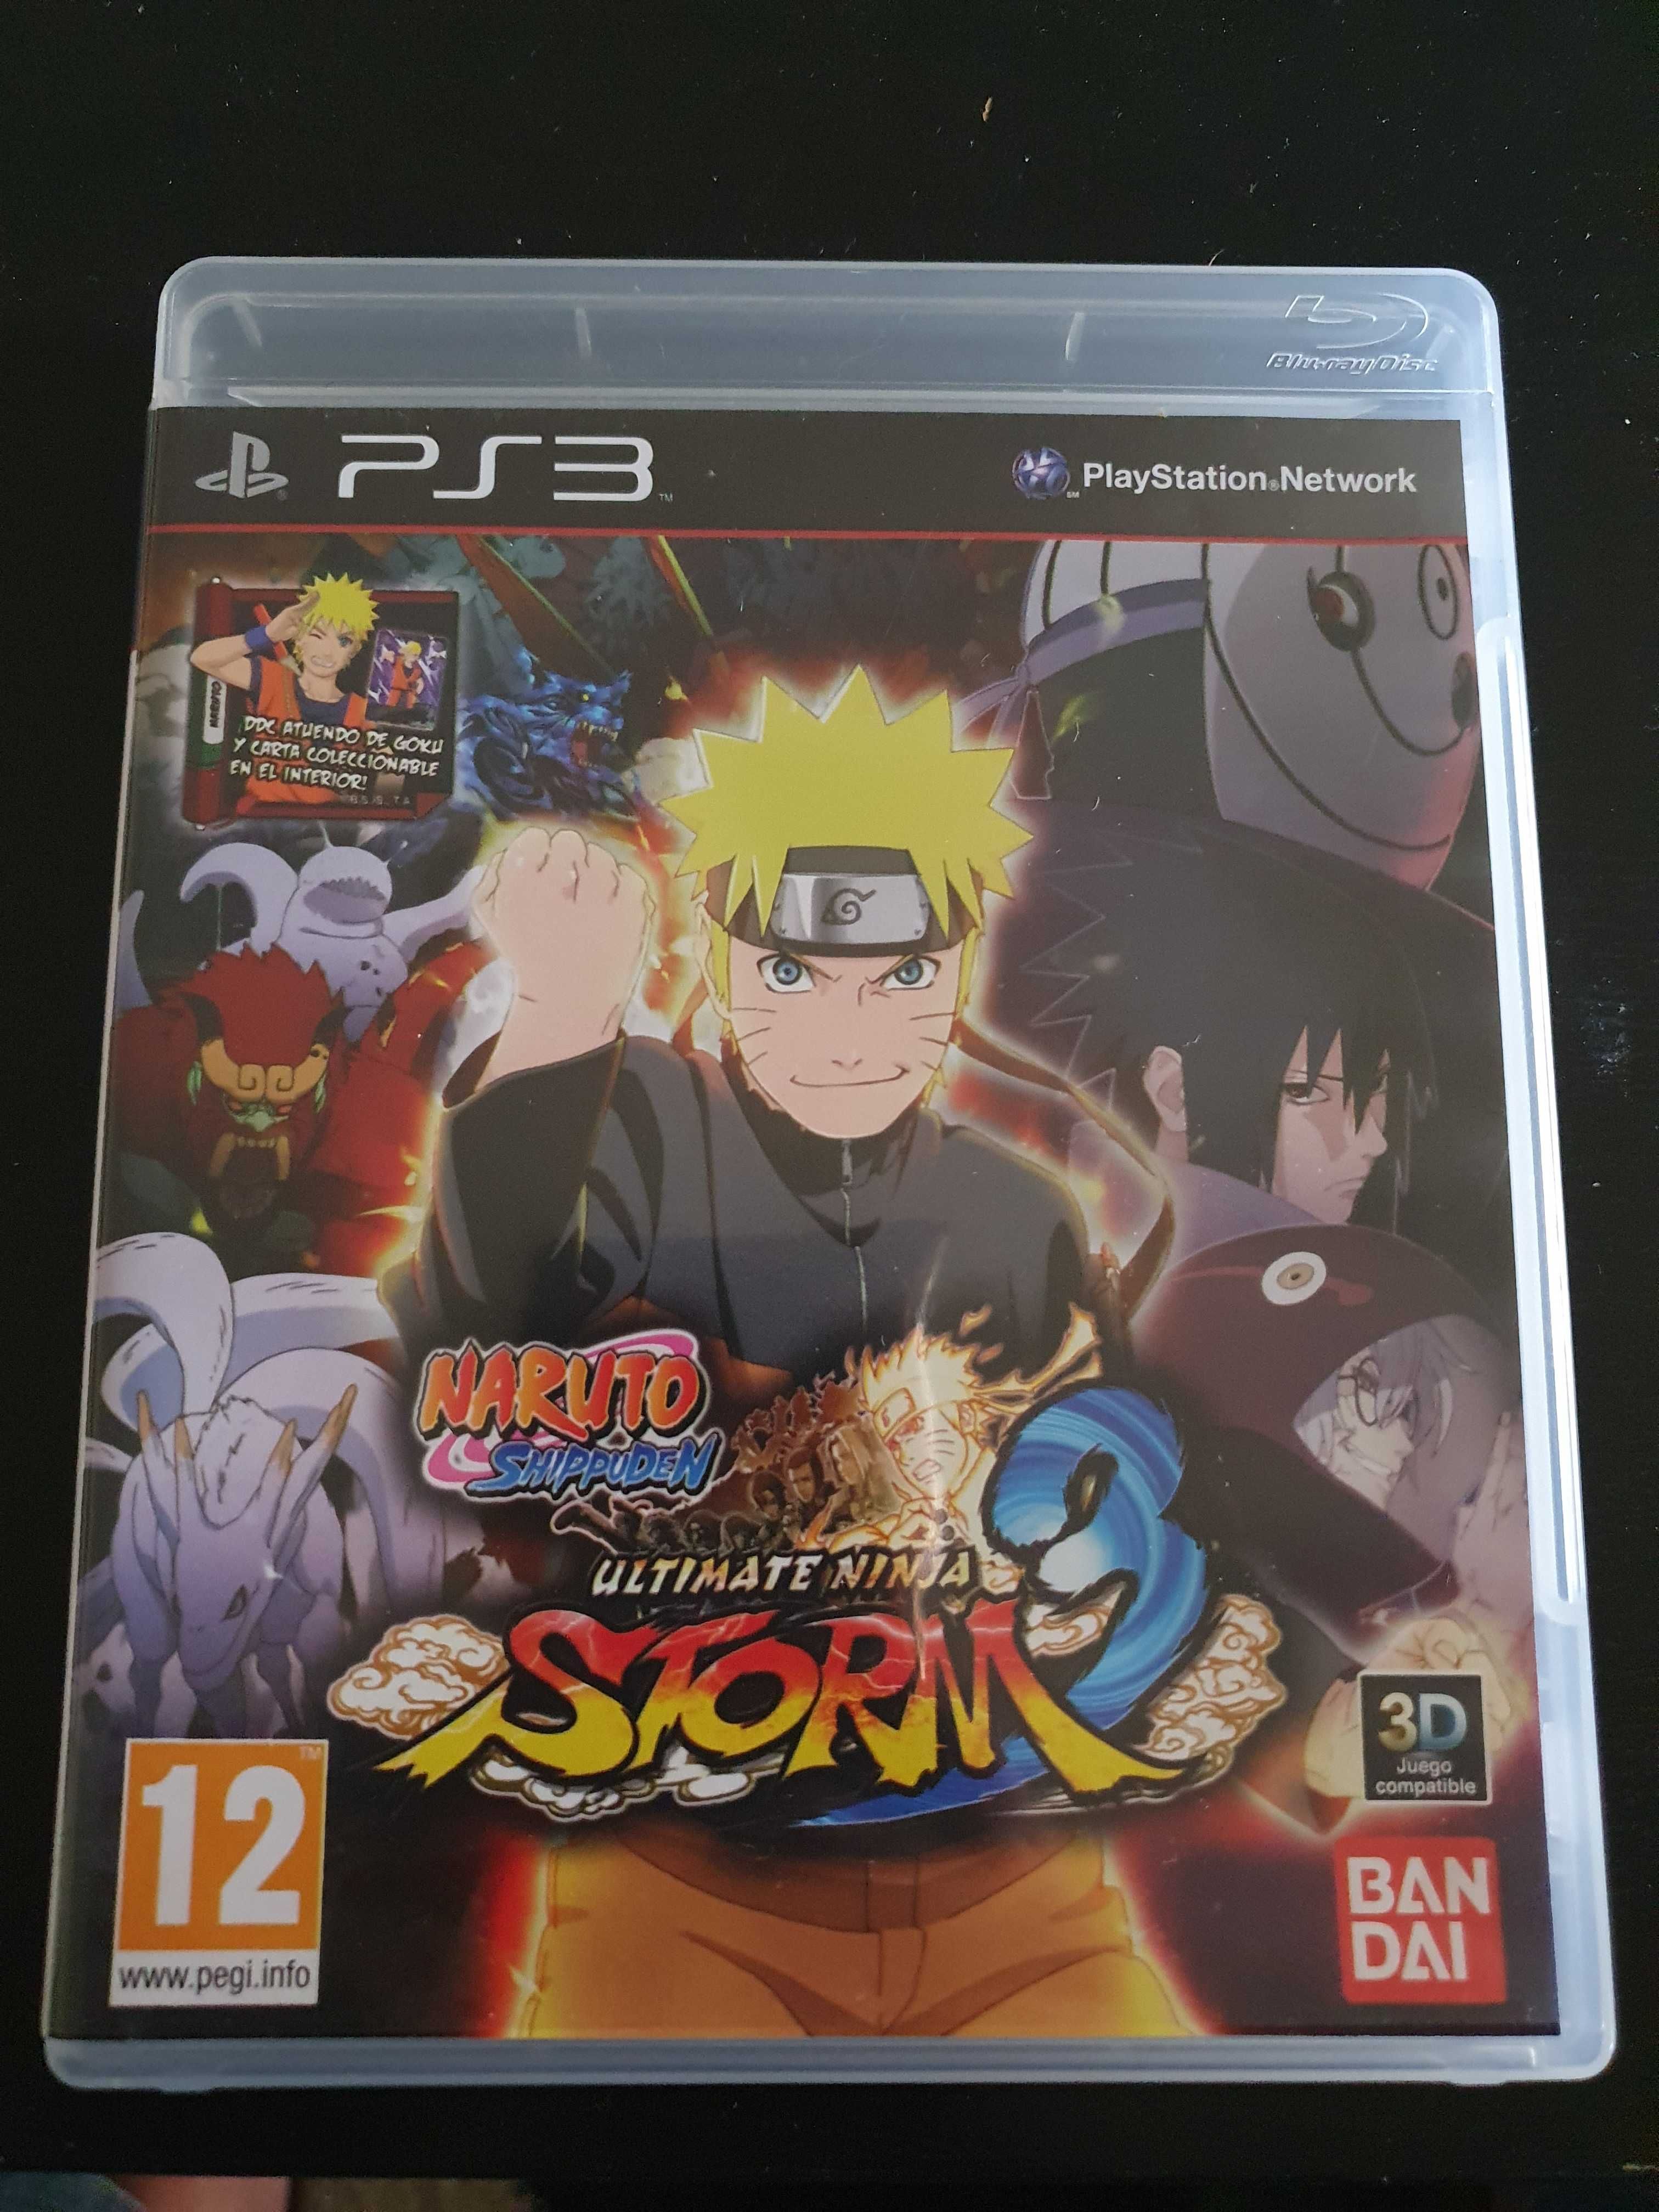 PS3 - Naruto Shippuden: Ultimate Ninja Storm 3 com carta do Naruto